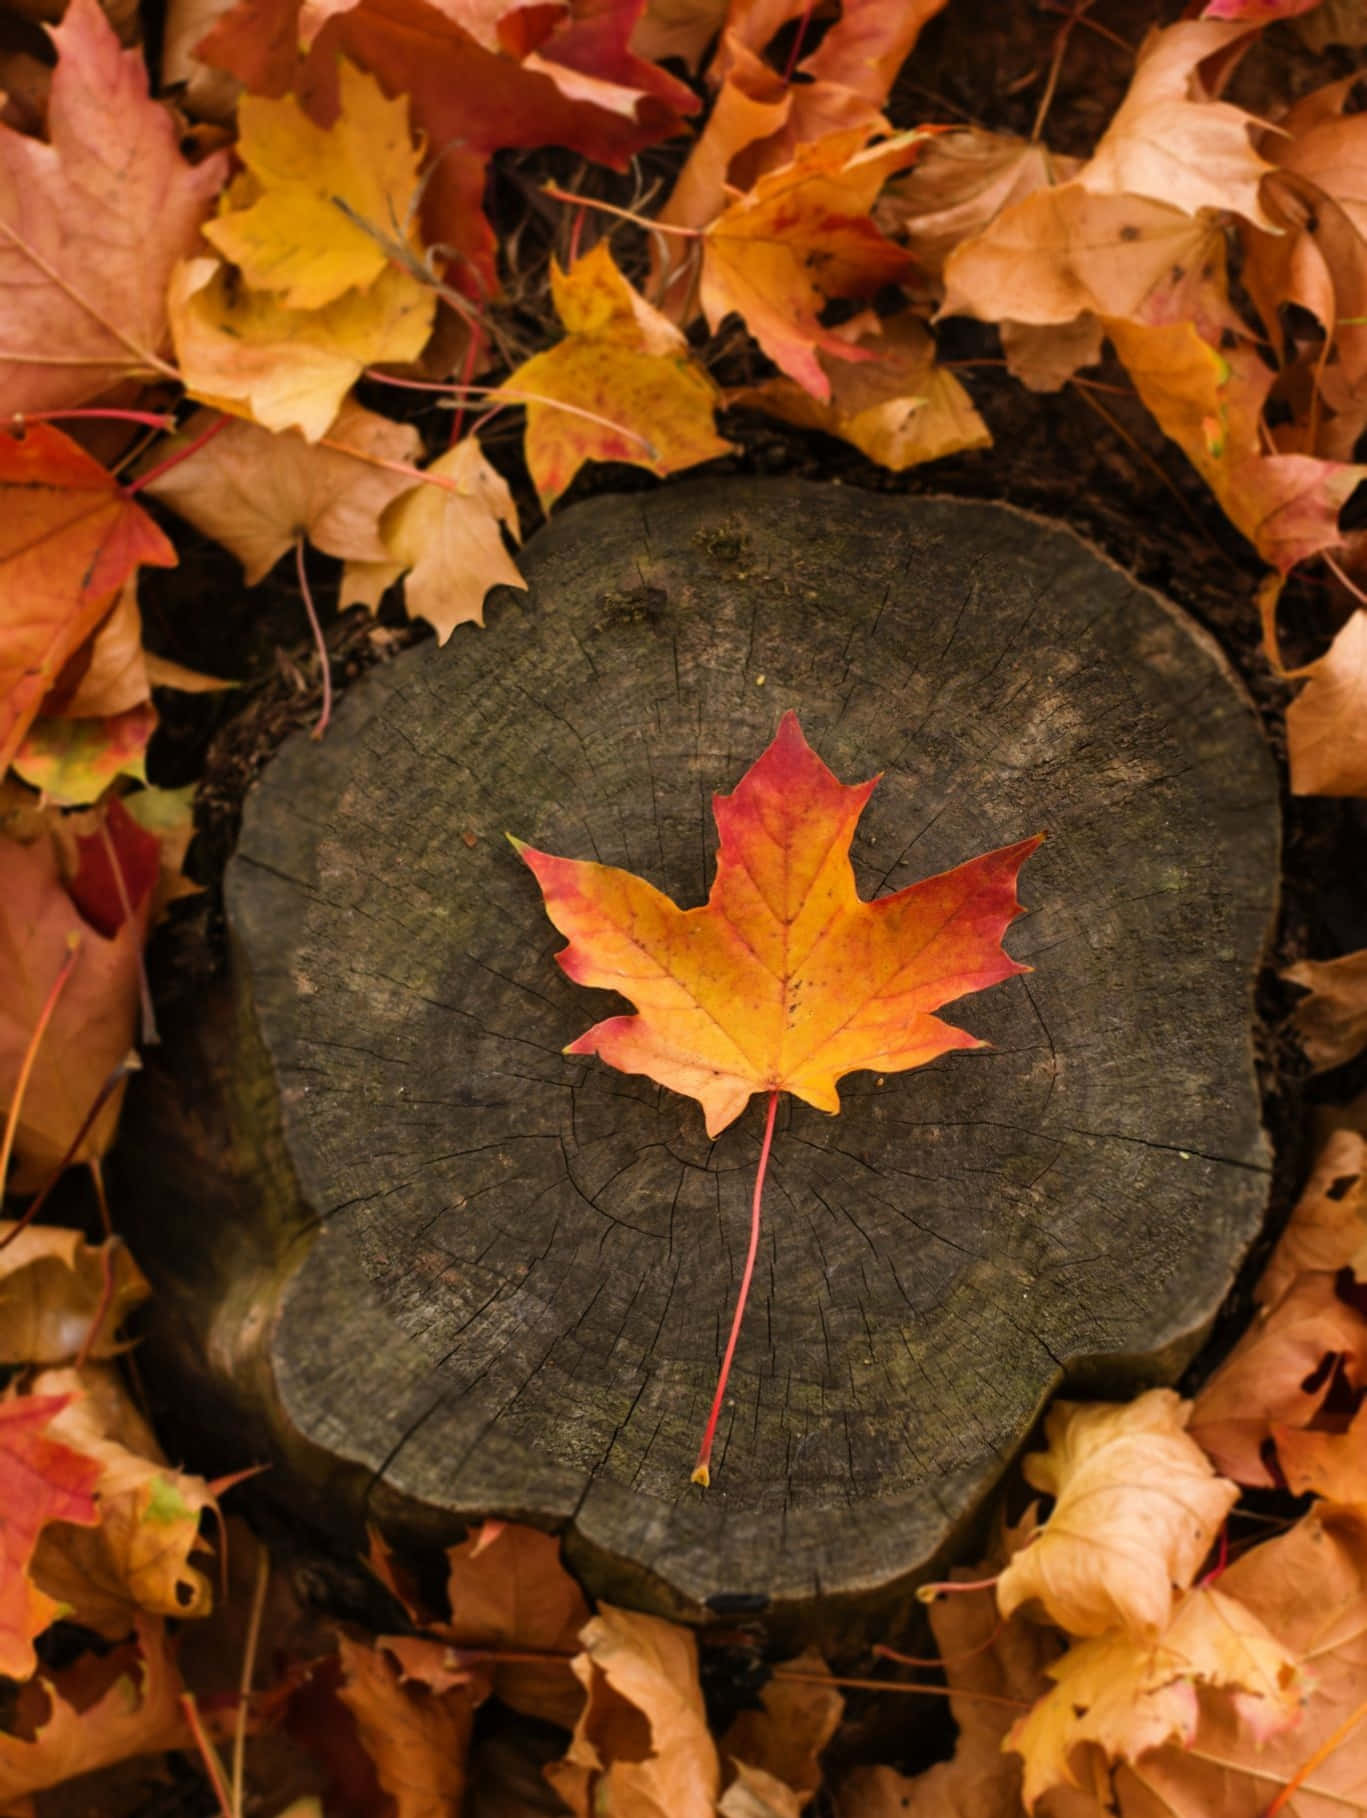 Enjoy the beauty of natural Fall season Aesthetics.